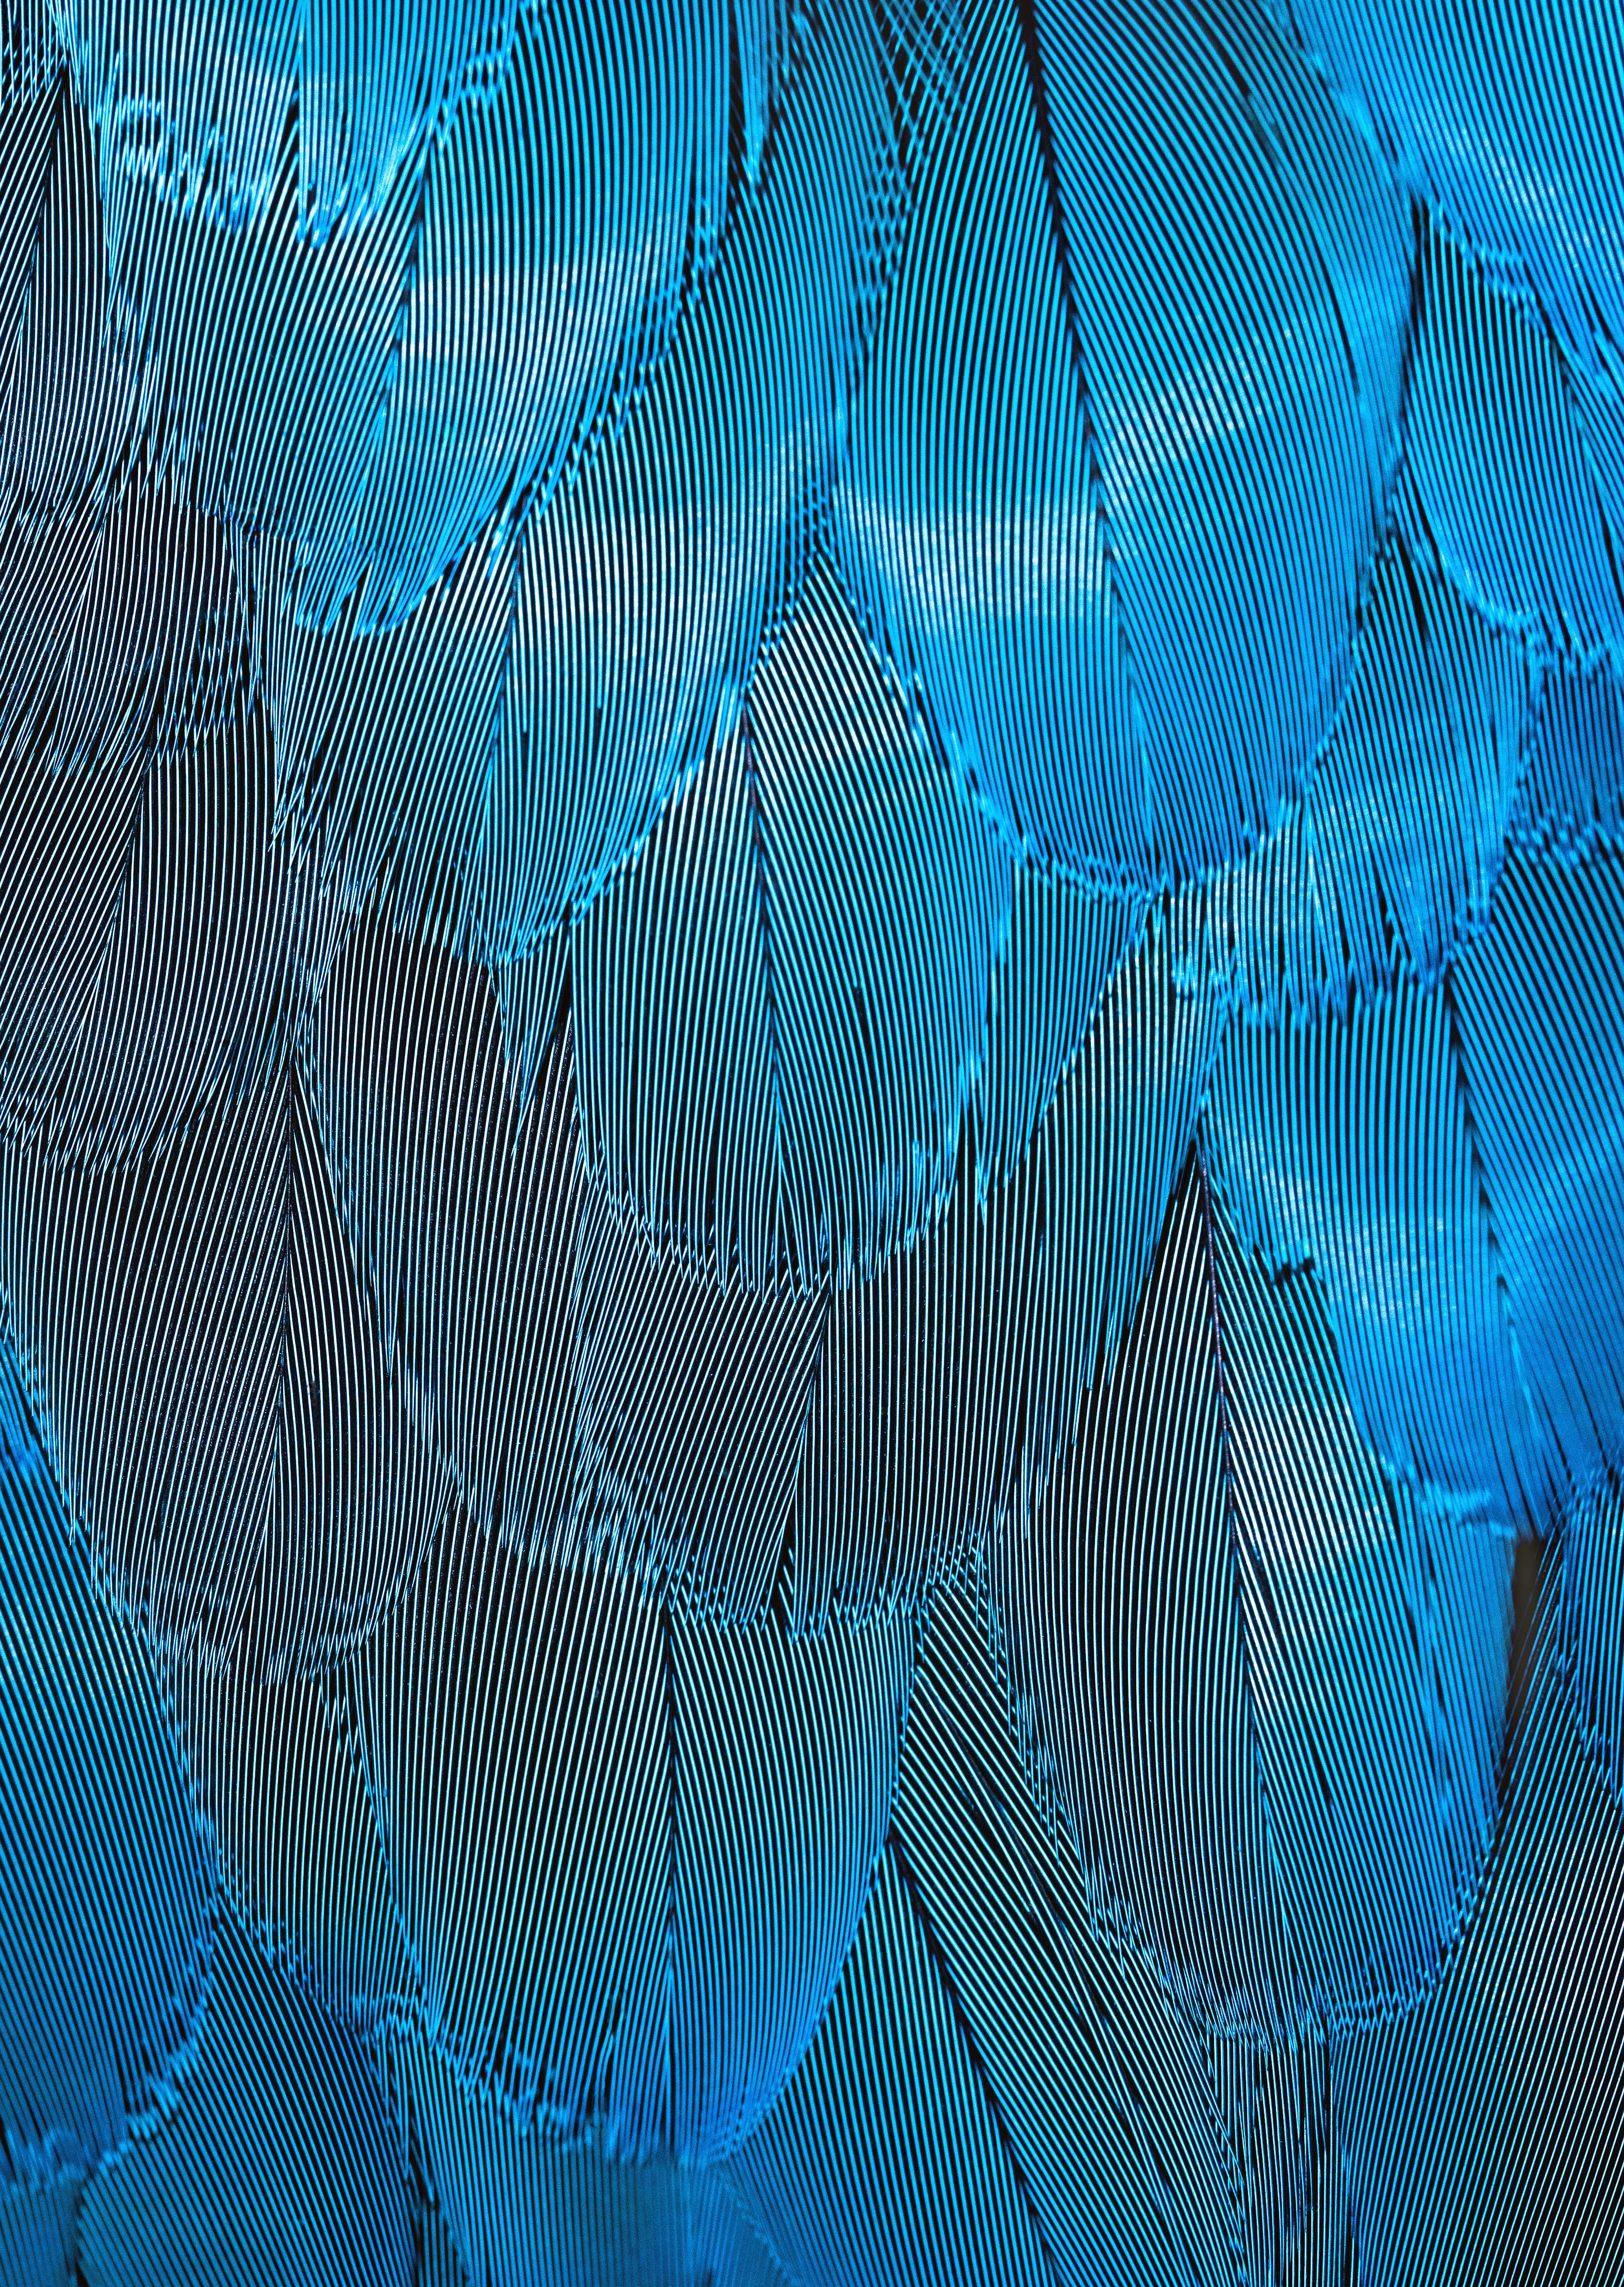 macro, feather, textures, blue, texture, iridescent UHD